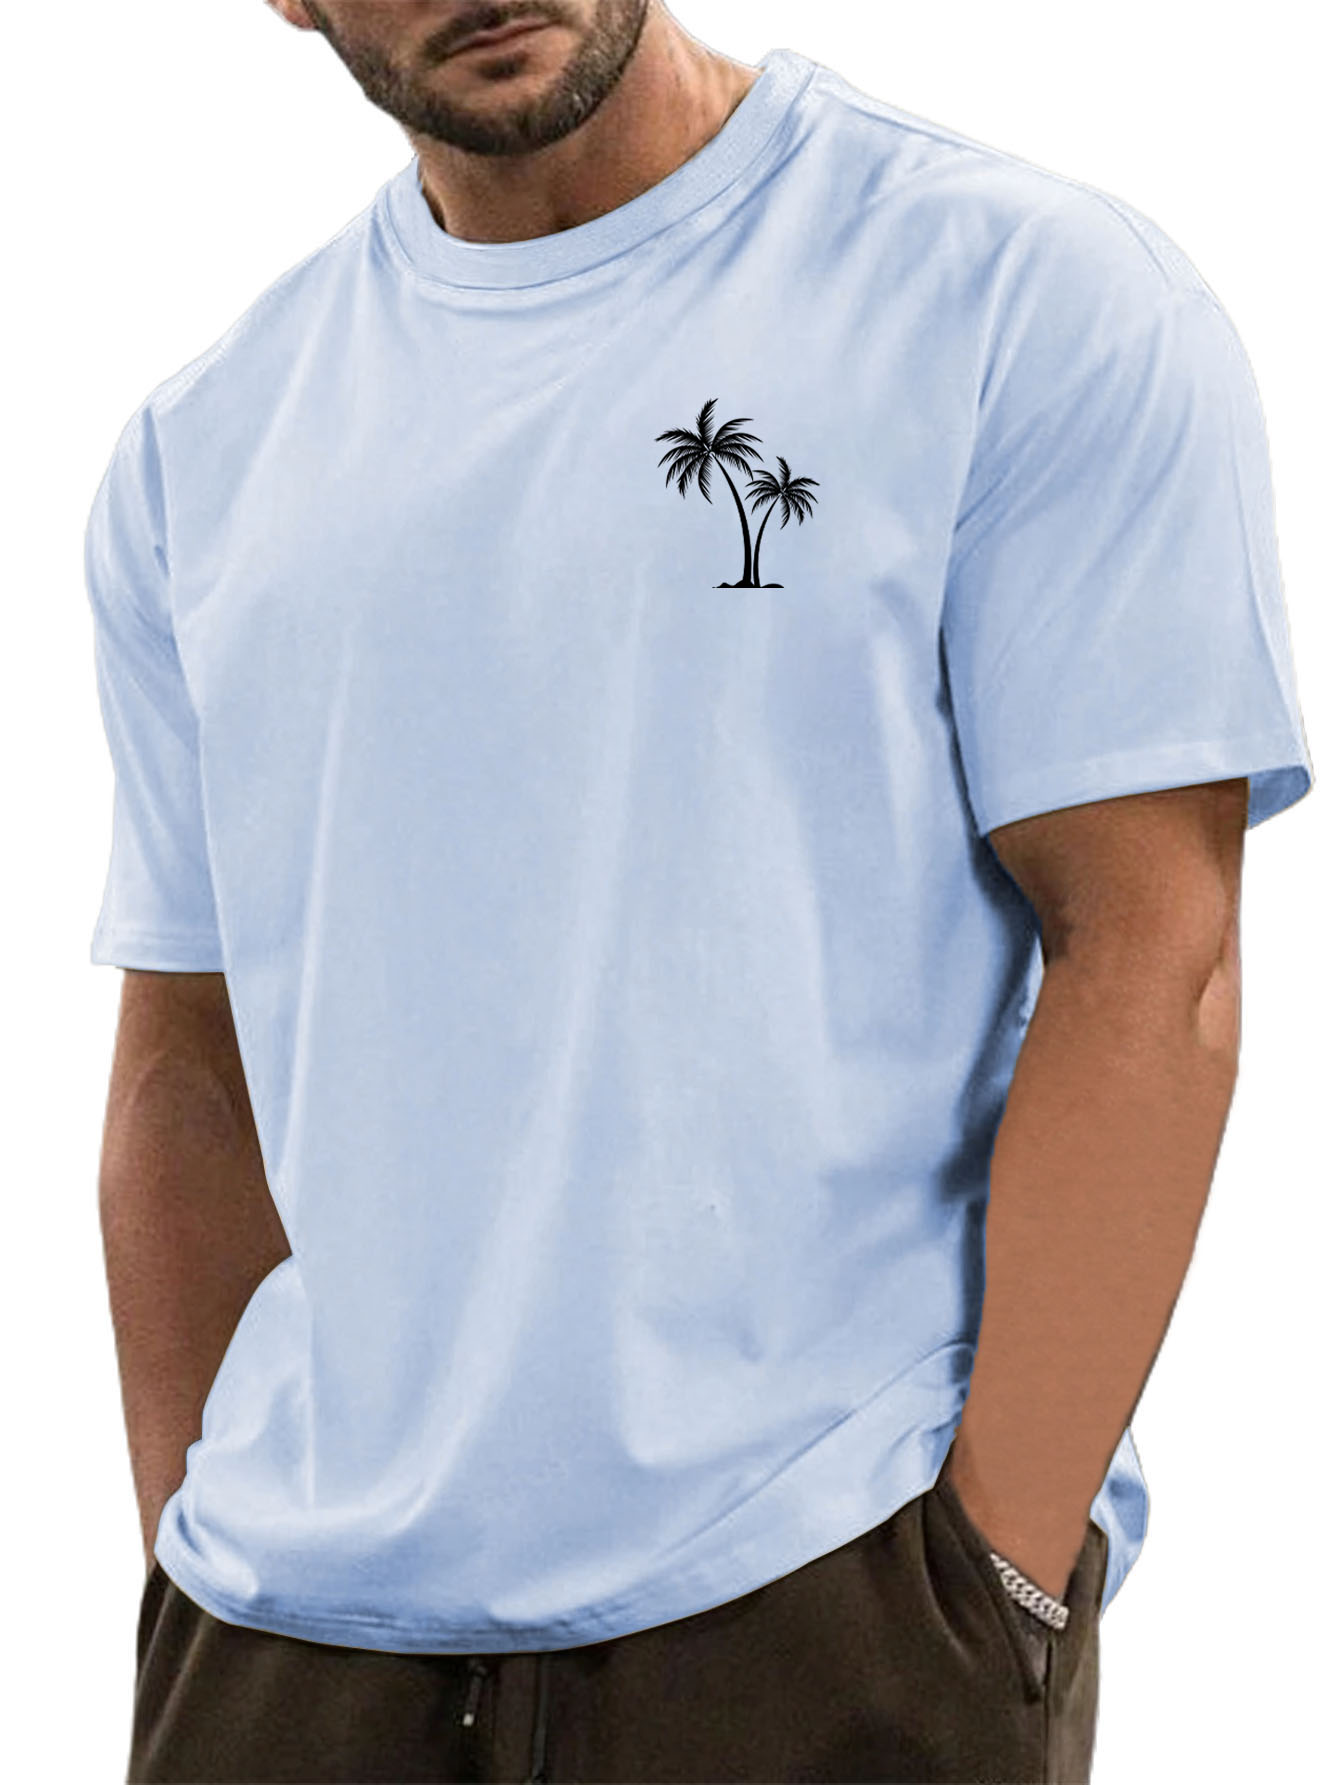 Men's Cotton 160g Basic Hawaiian Palm Tree Print Short Sleeve T-Shirt